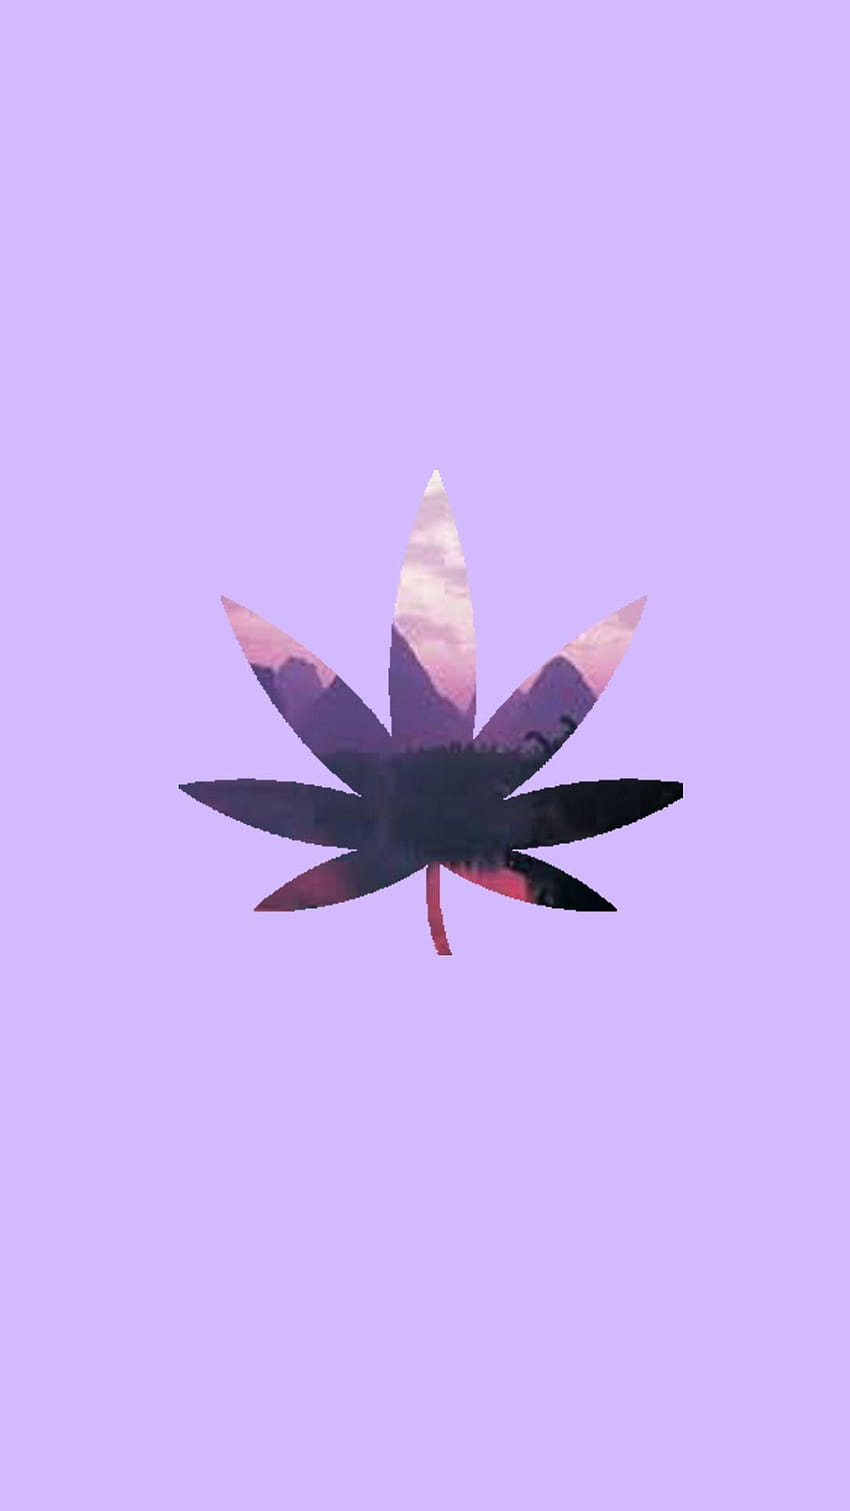 weed leaf background tumblr